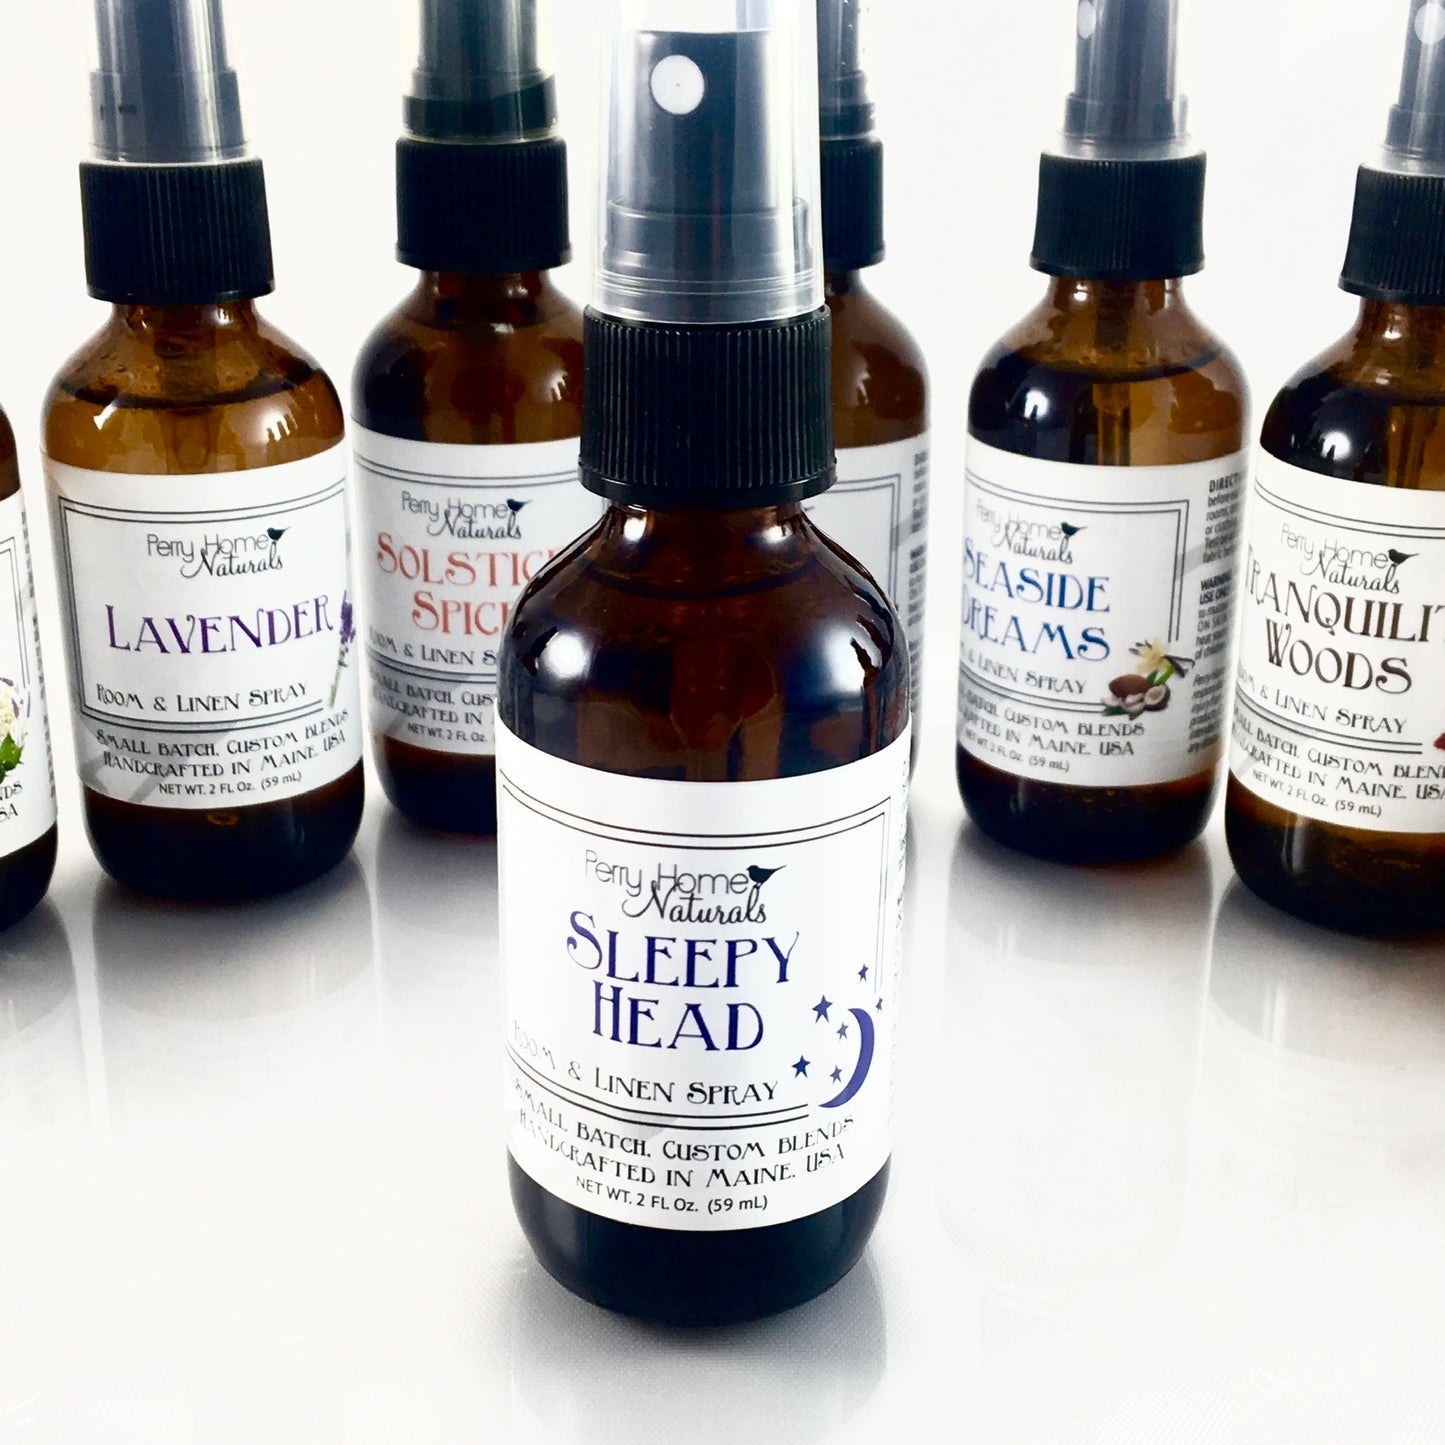 Sleepy Head Organic Room and Linen Spray - Aromatherapy Room Spray